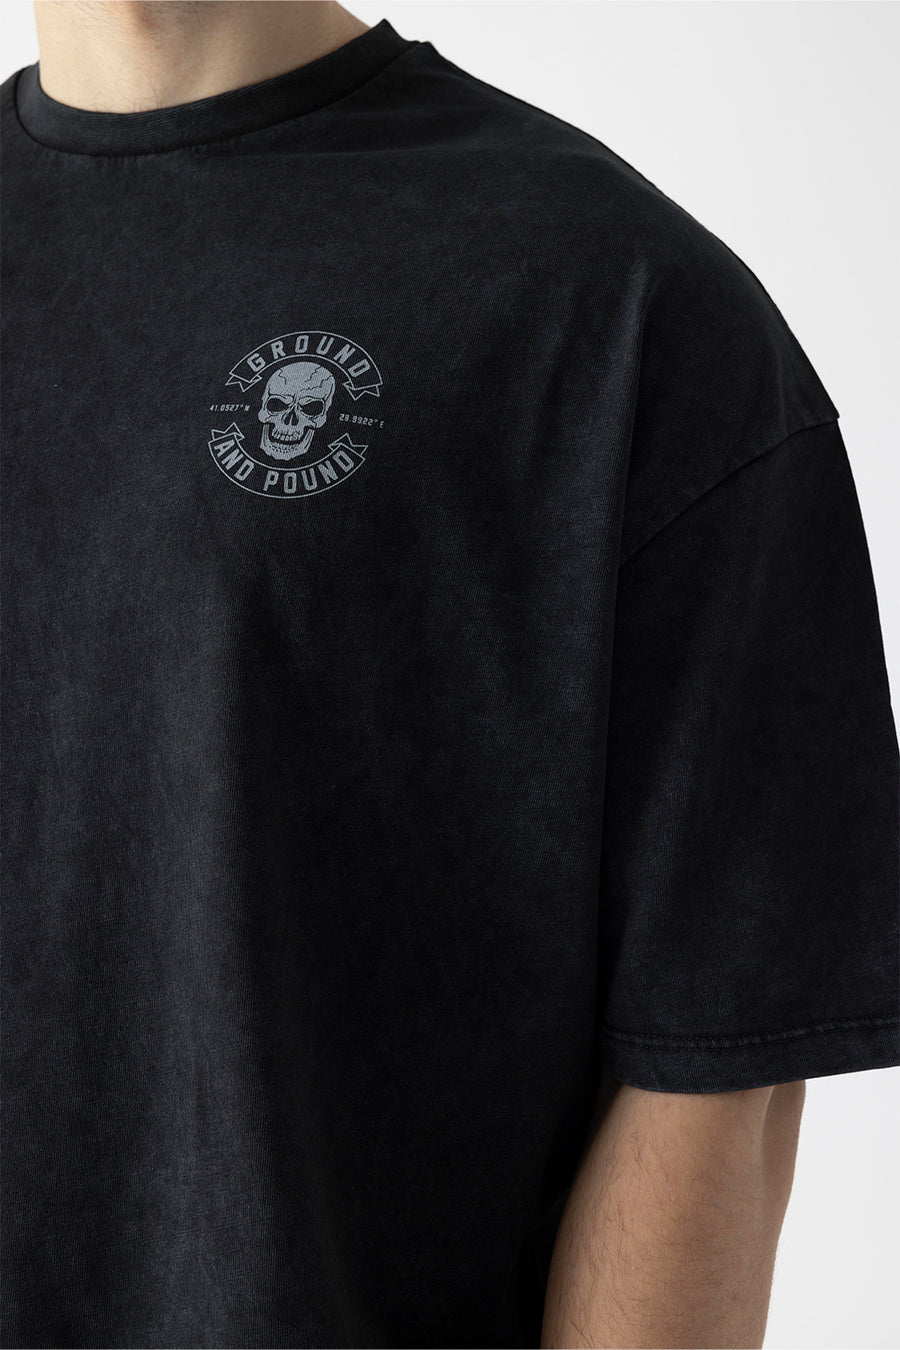 GNP Washed Oversize Skull T-Shirt